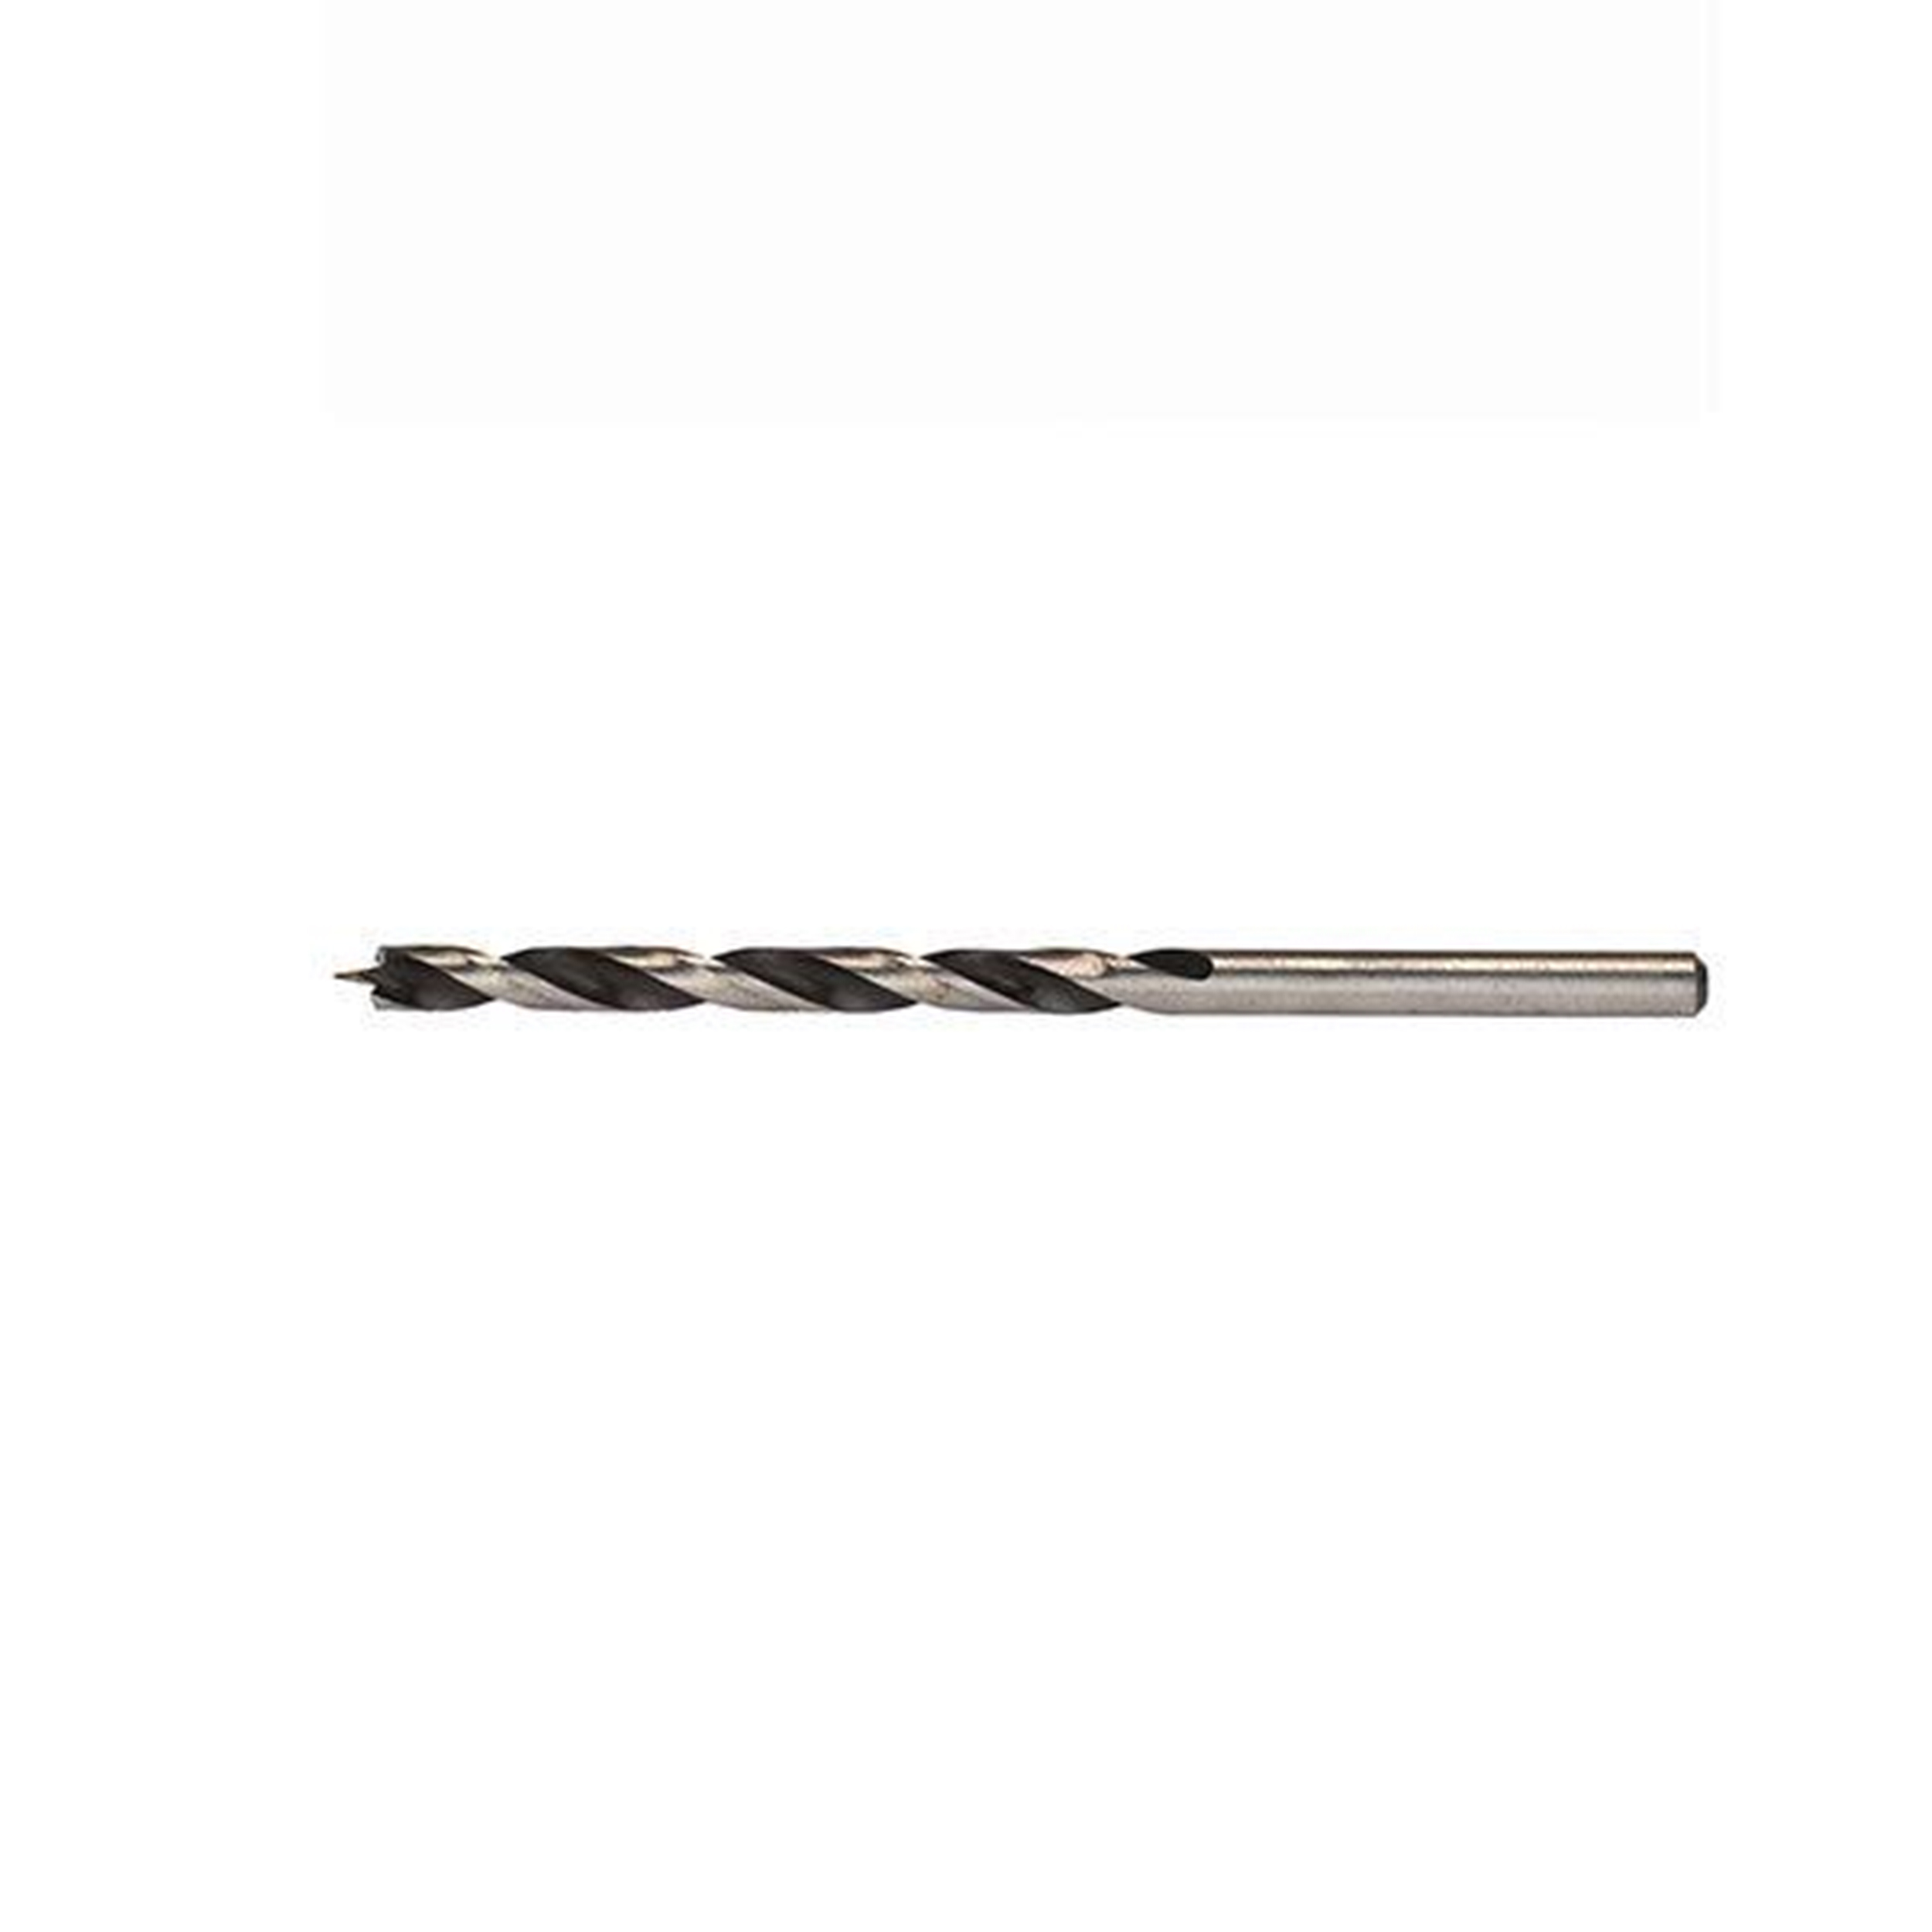 5/32-inch Chrome-vanadium Steel Brad Point Drill Bit